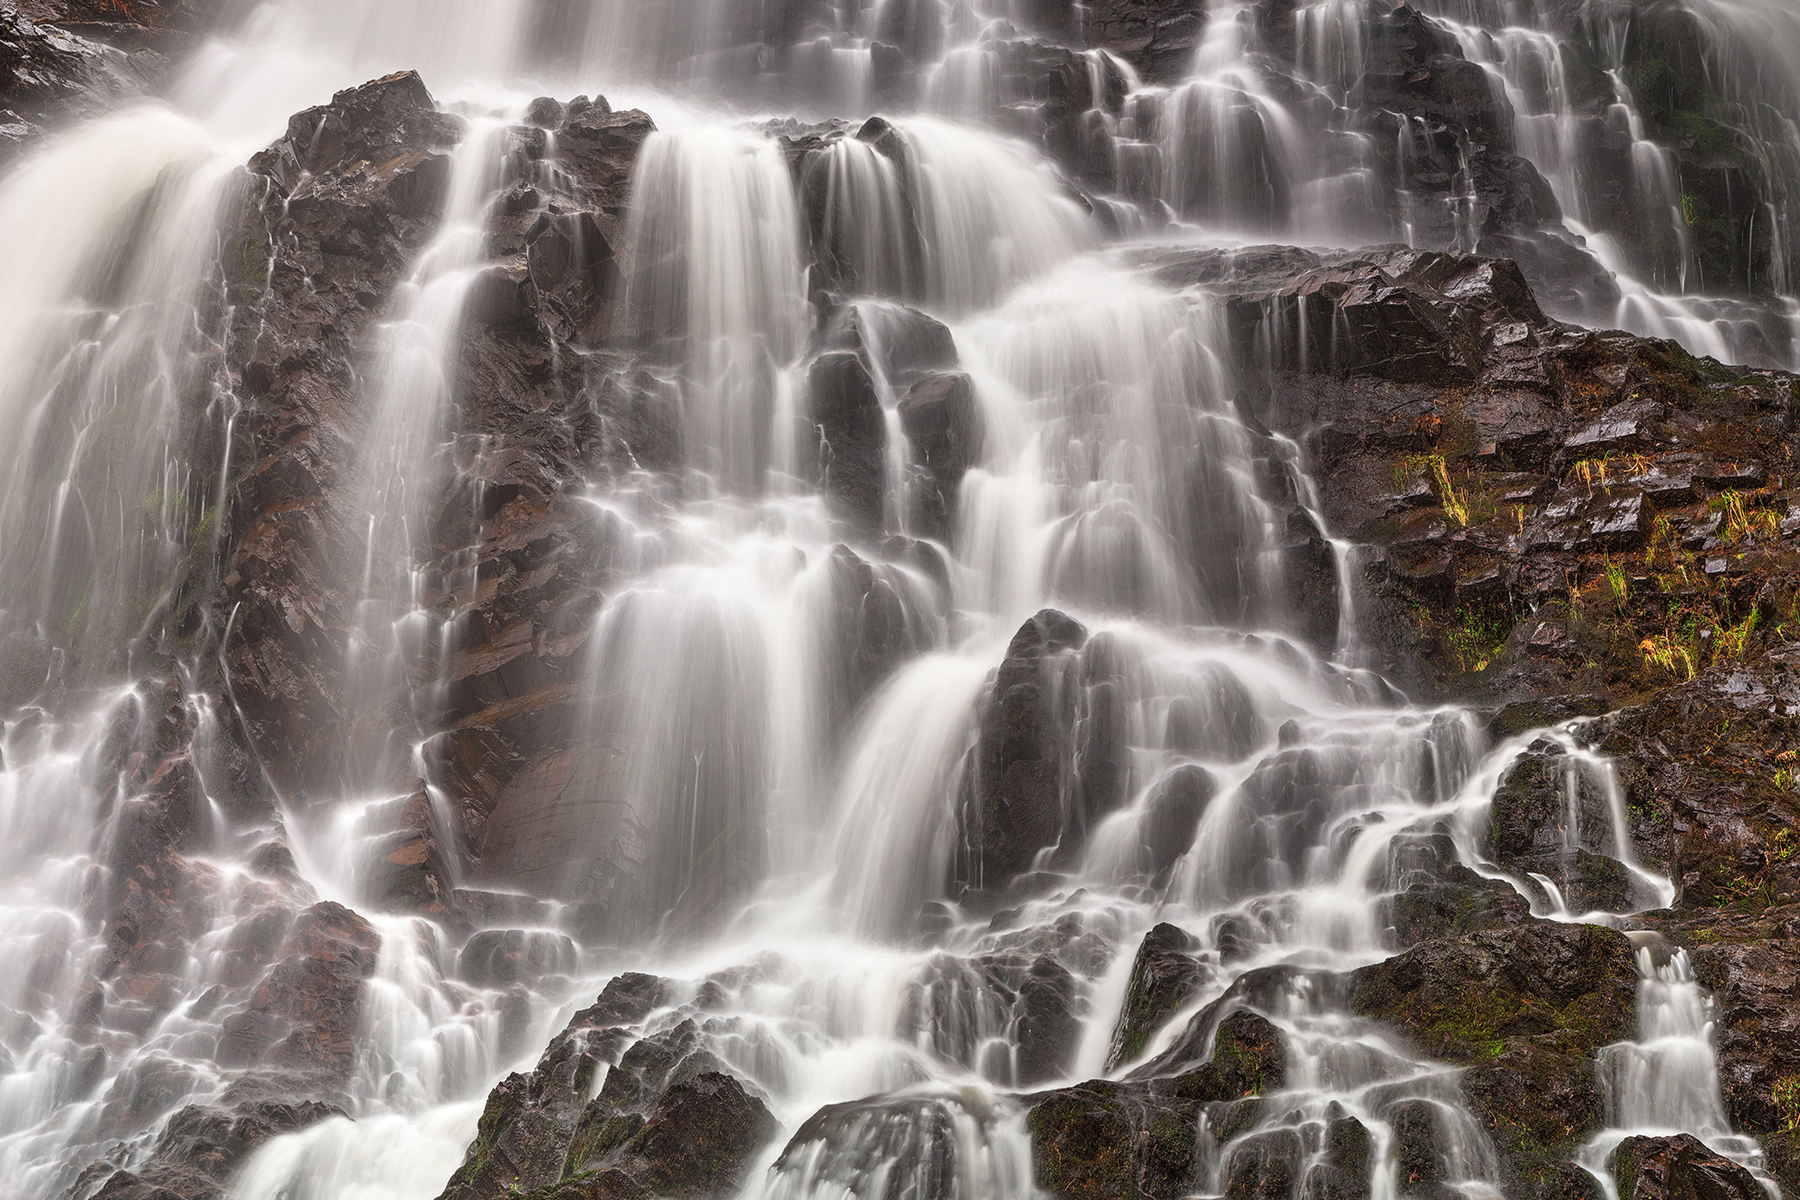 Hays rugged falls - hdr photo